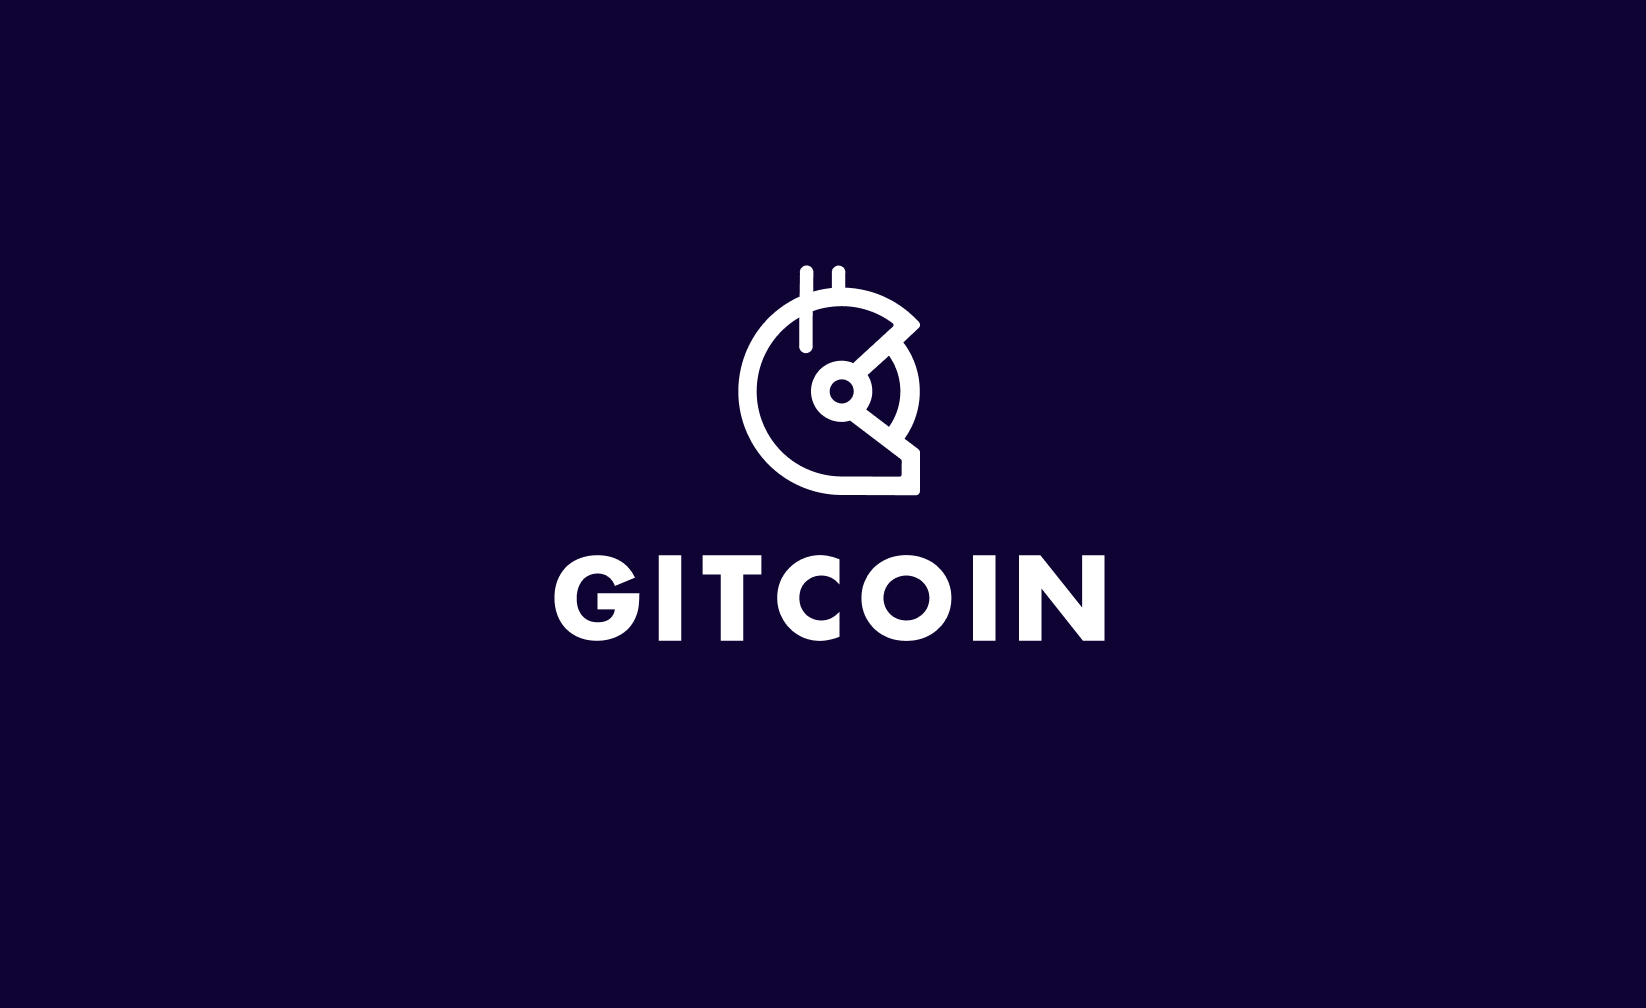 Gitcoin